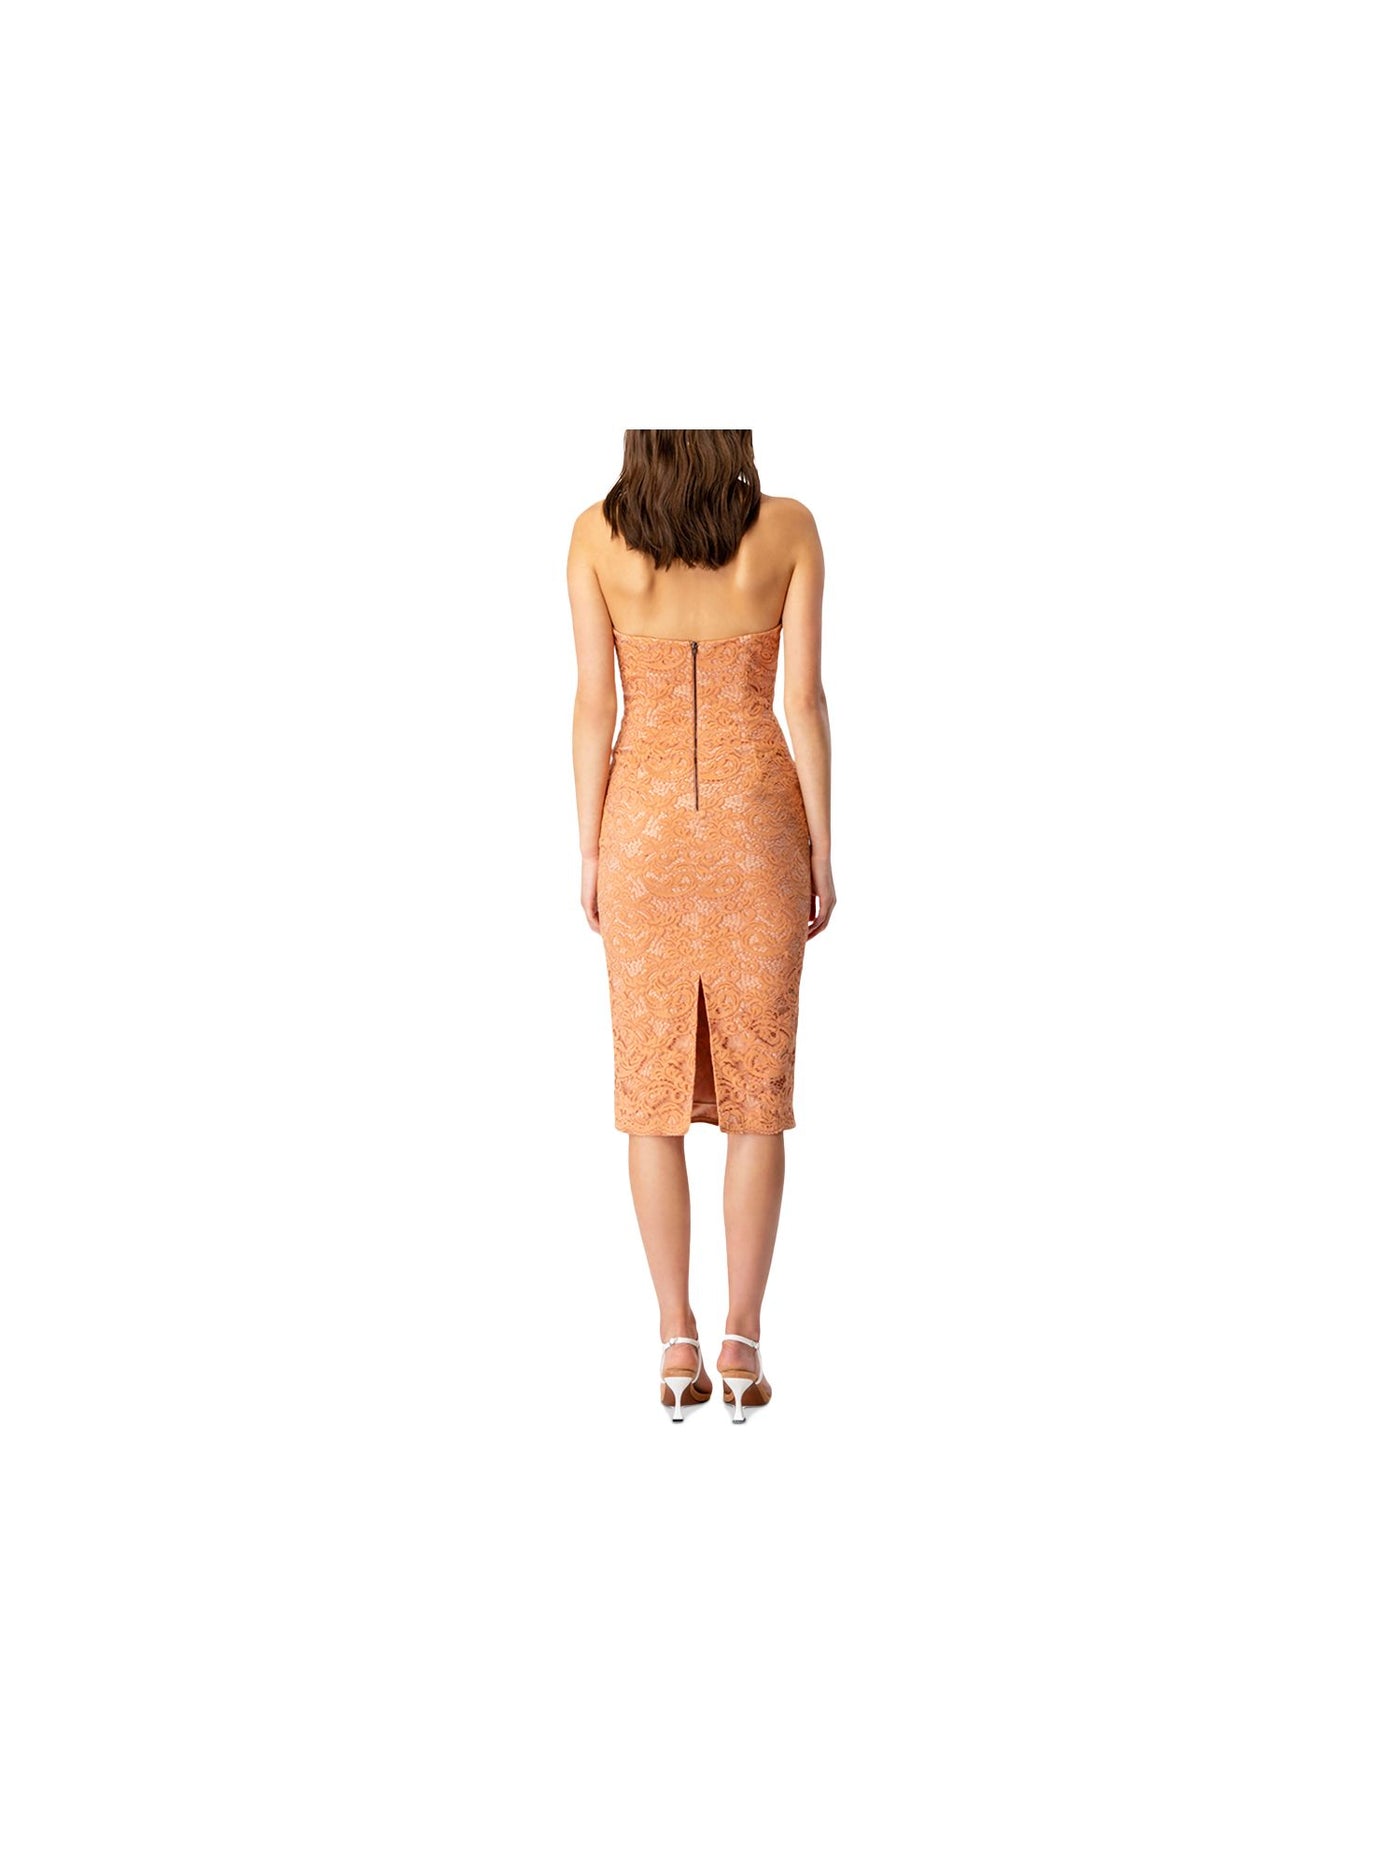 BARDOT Womens Orange Slitted Zippered Corset Boning Lined Lace Sleeveless Halter Below The Knee Evening Sheath Dress 6